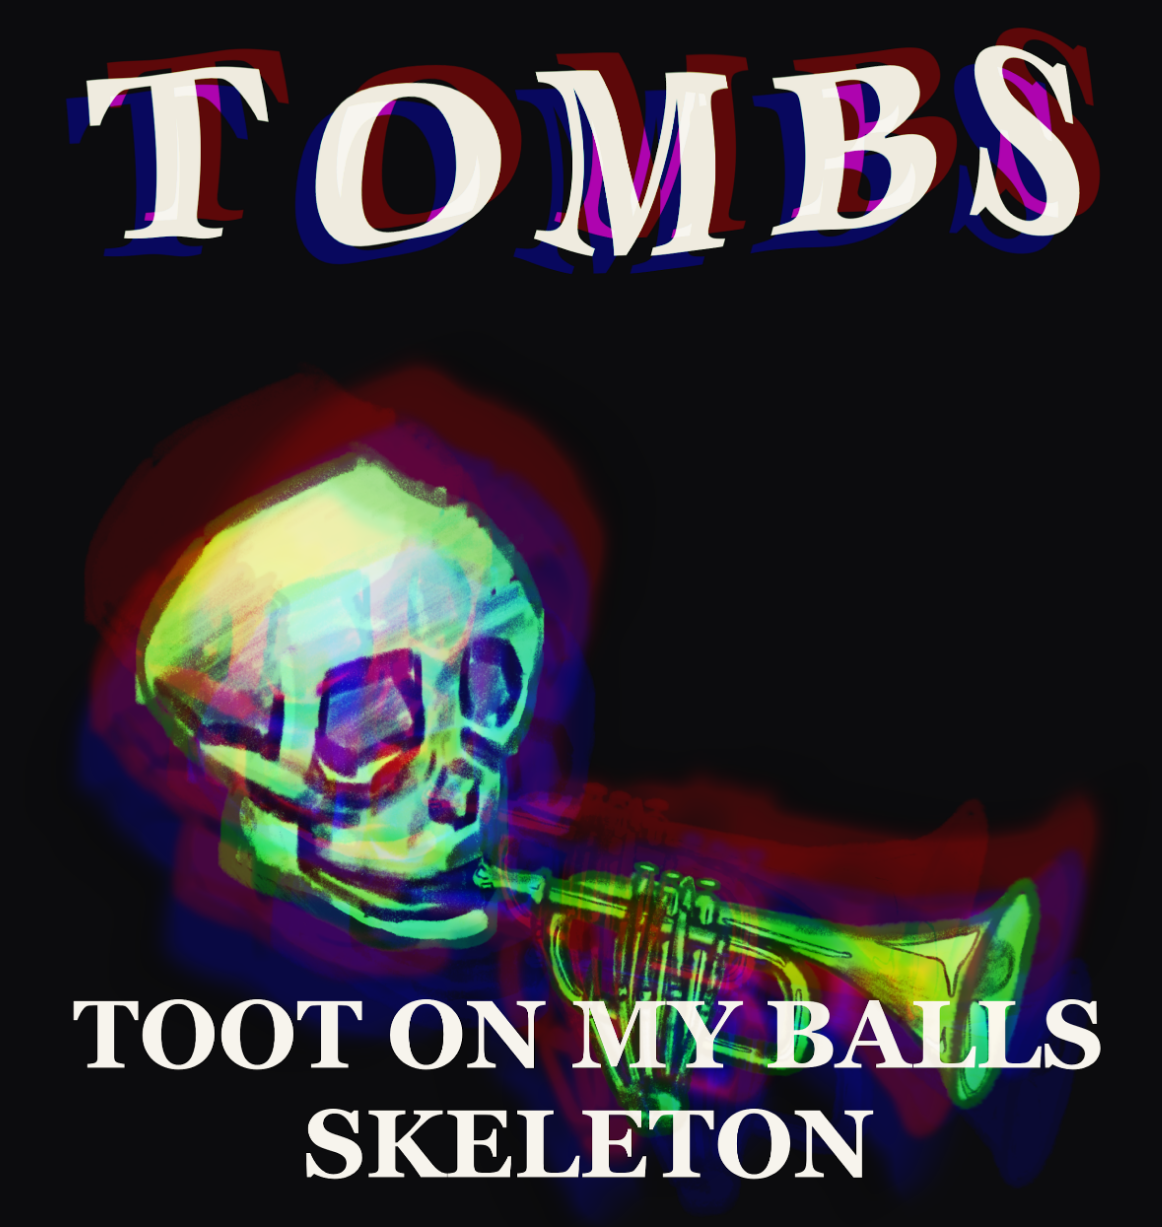 TOMBS: Toot on my balls skeleton